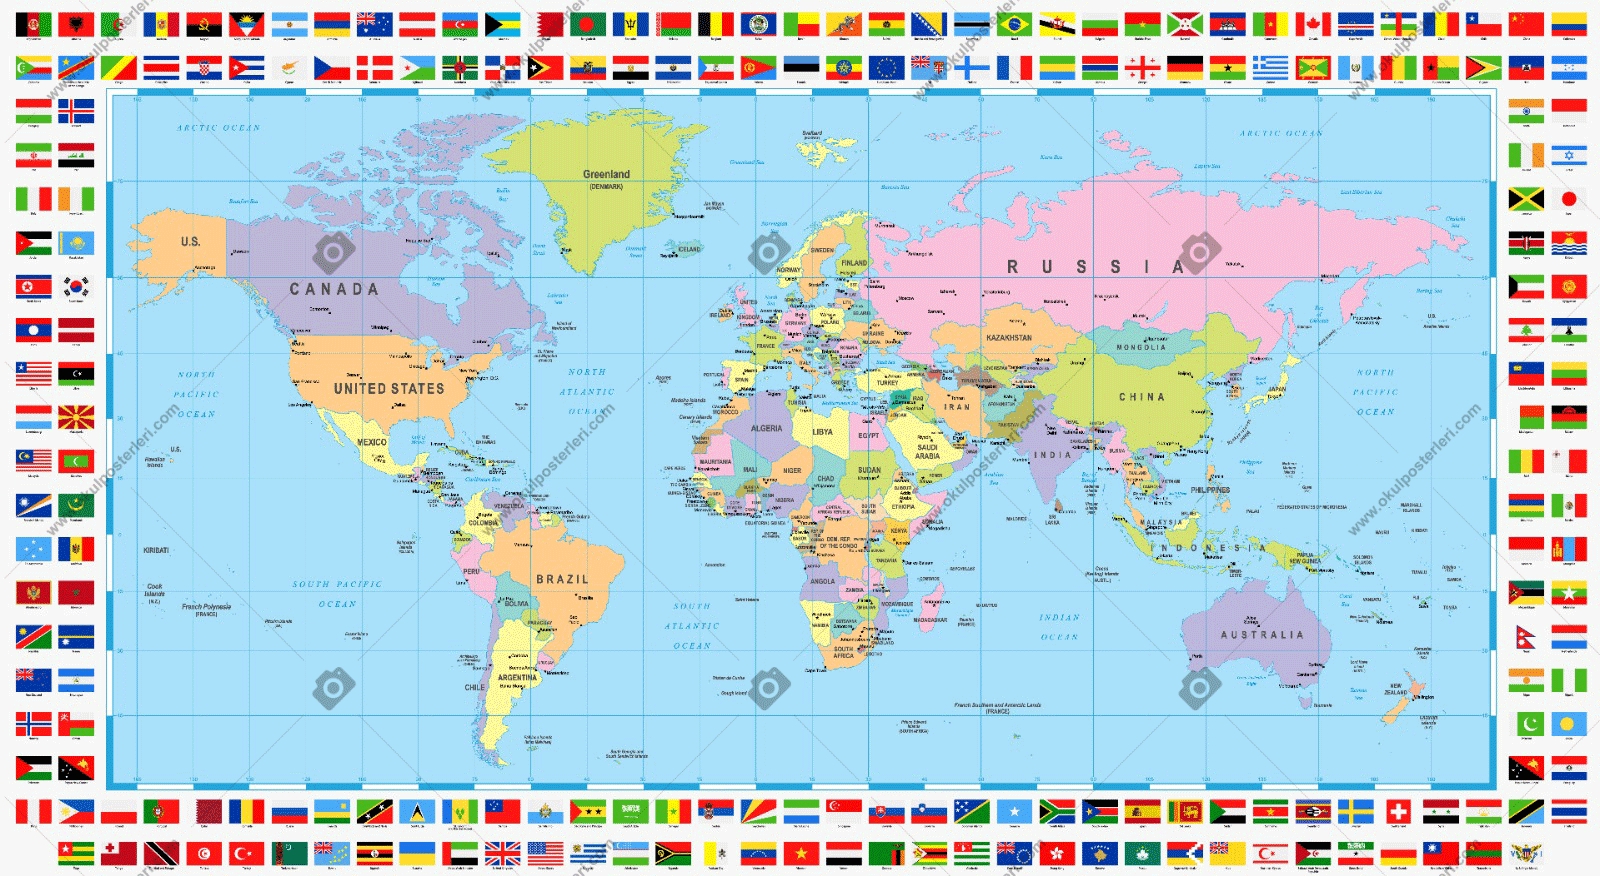 Dünya Siyasi Haritası 4